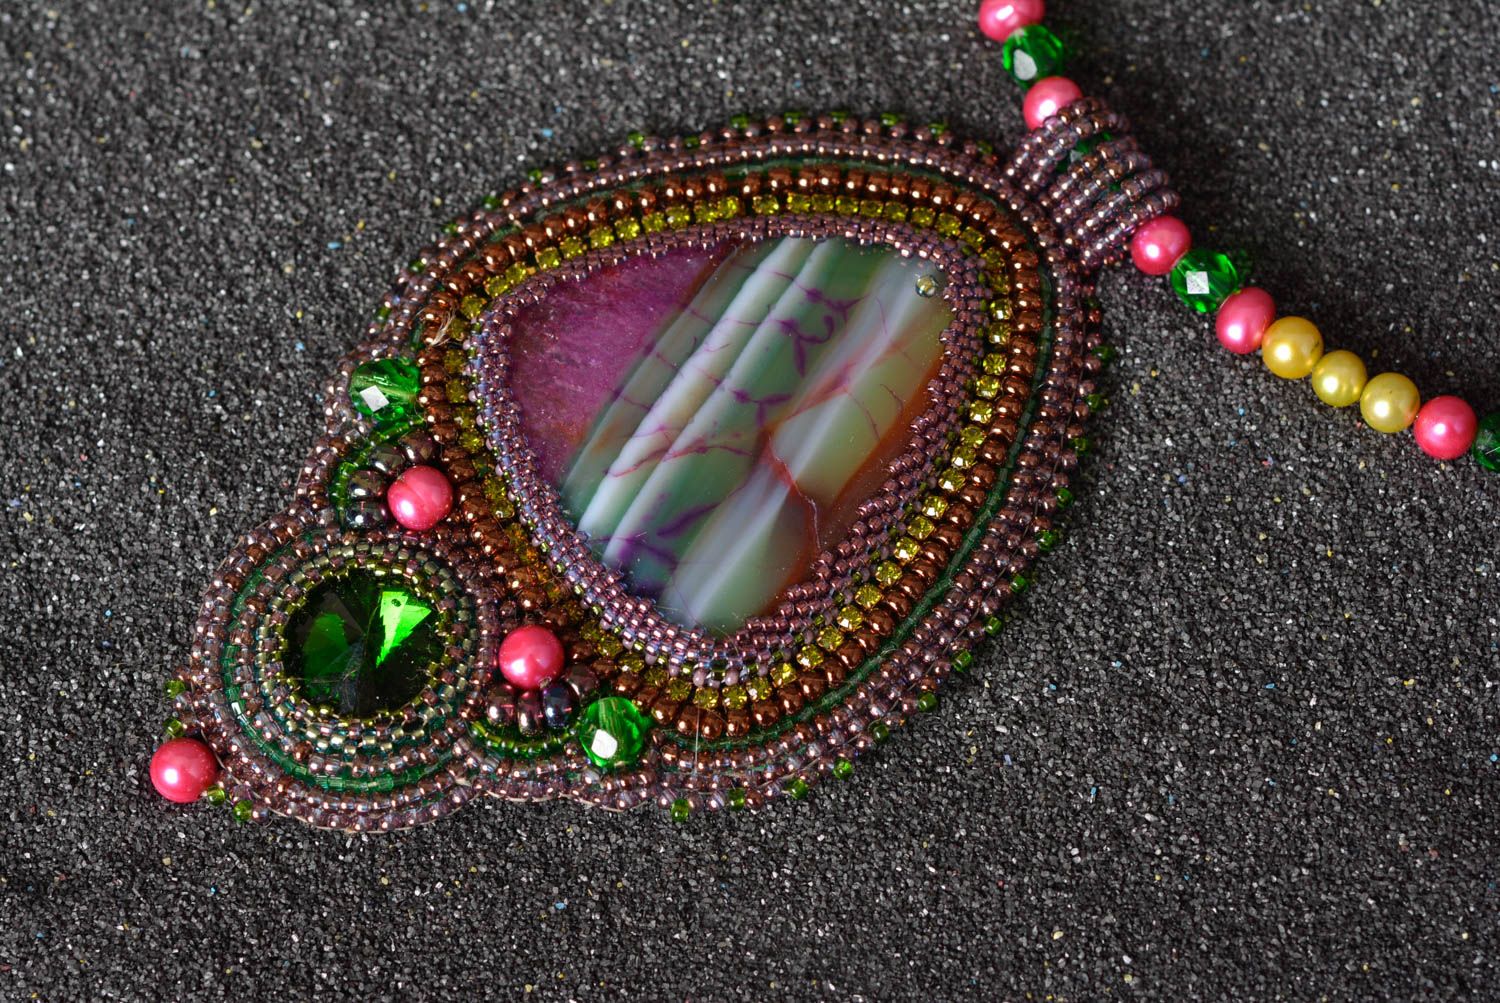 Beaded unusual necklace handmade stylish accessories beautiful jewelry photo 3